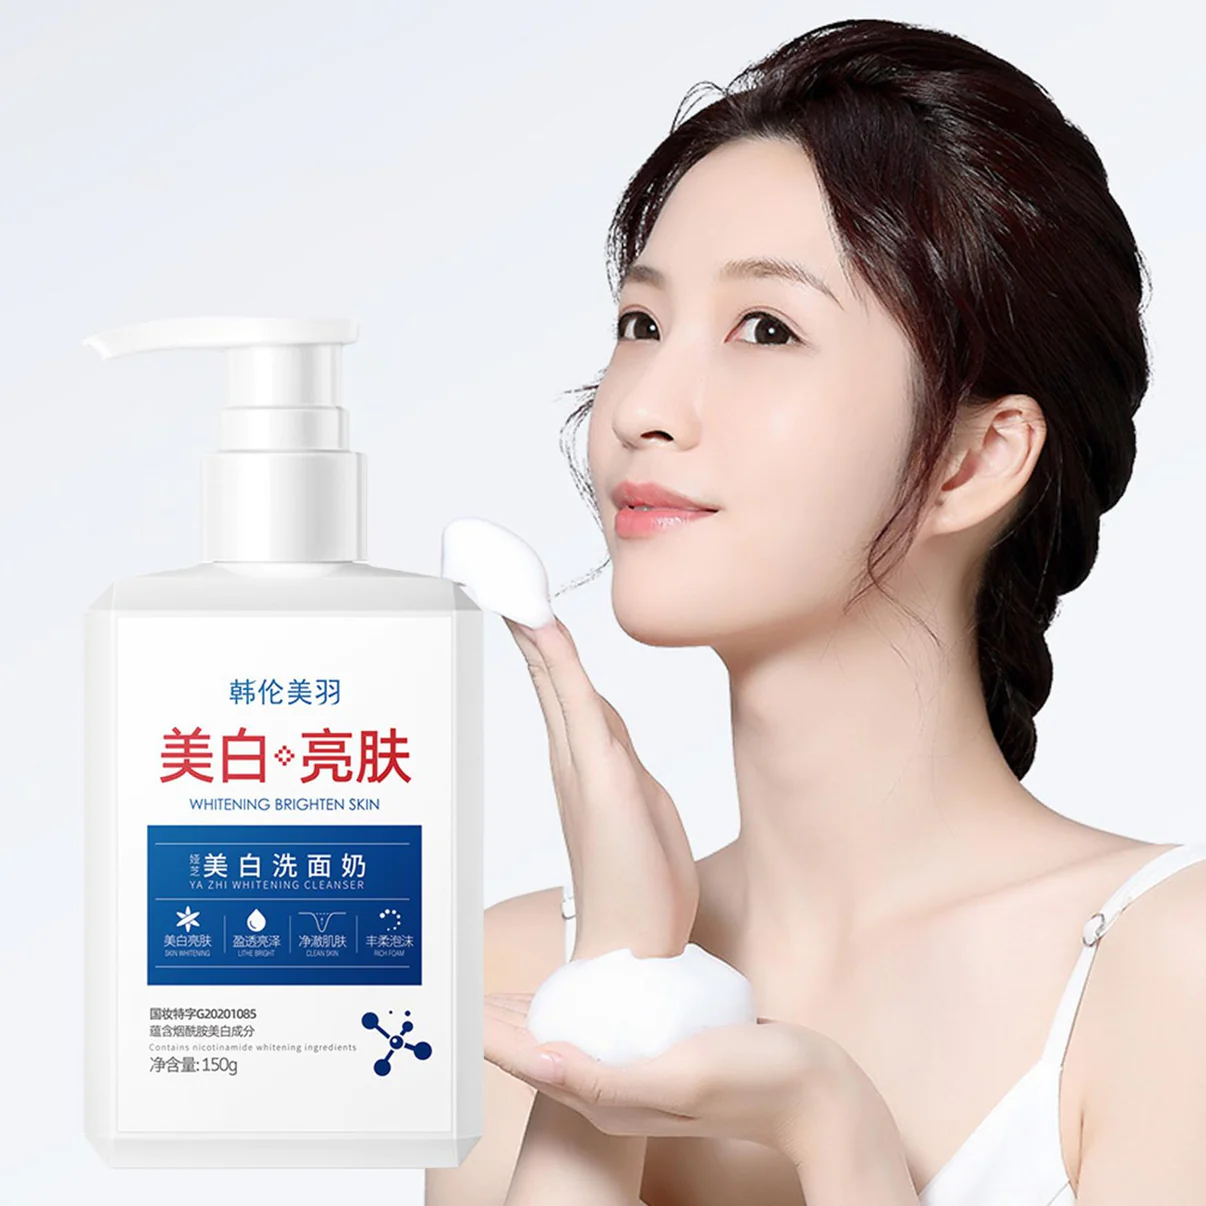 Korean Facial Rejuvenating Cleanser - Revitalize Your Skin image